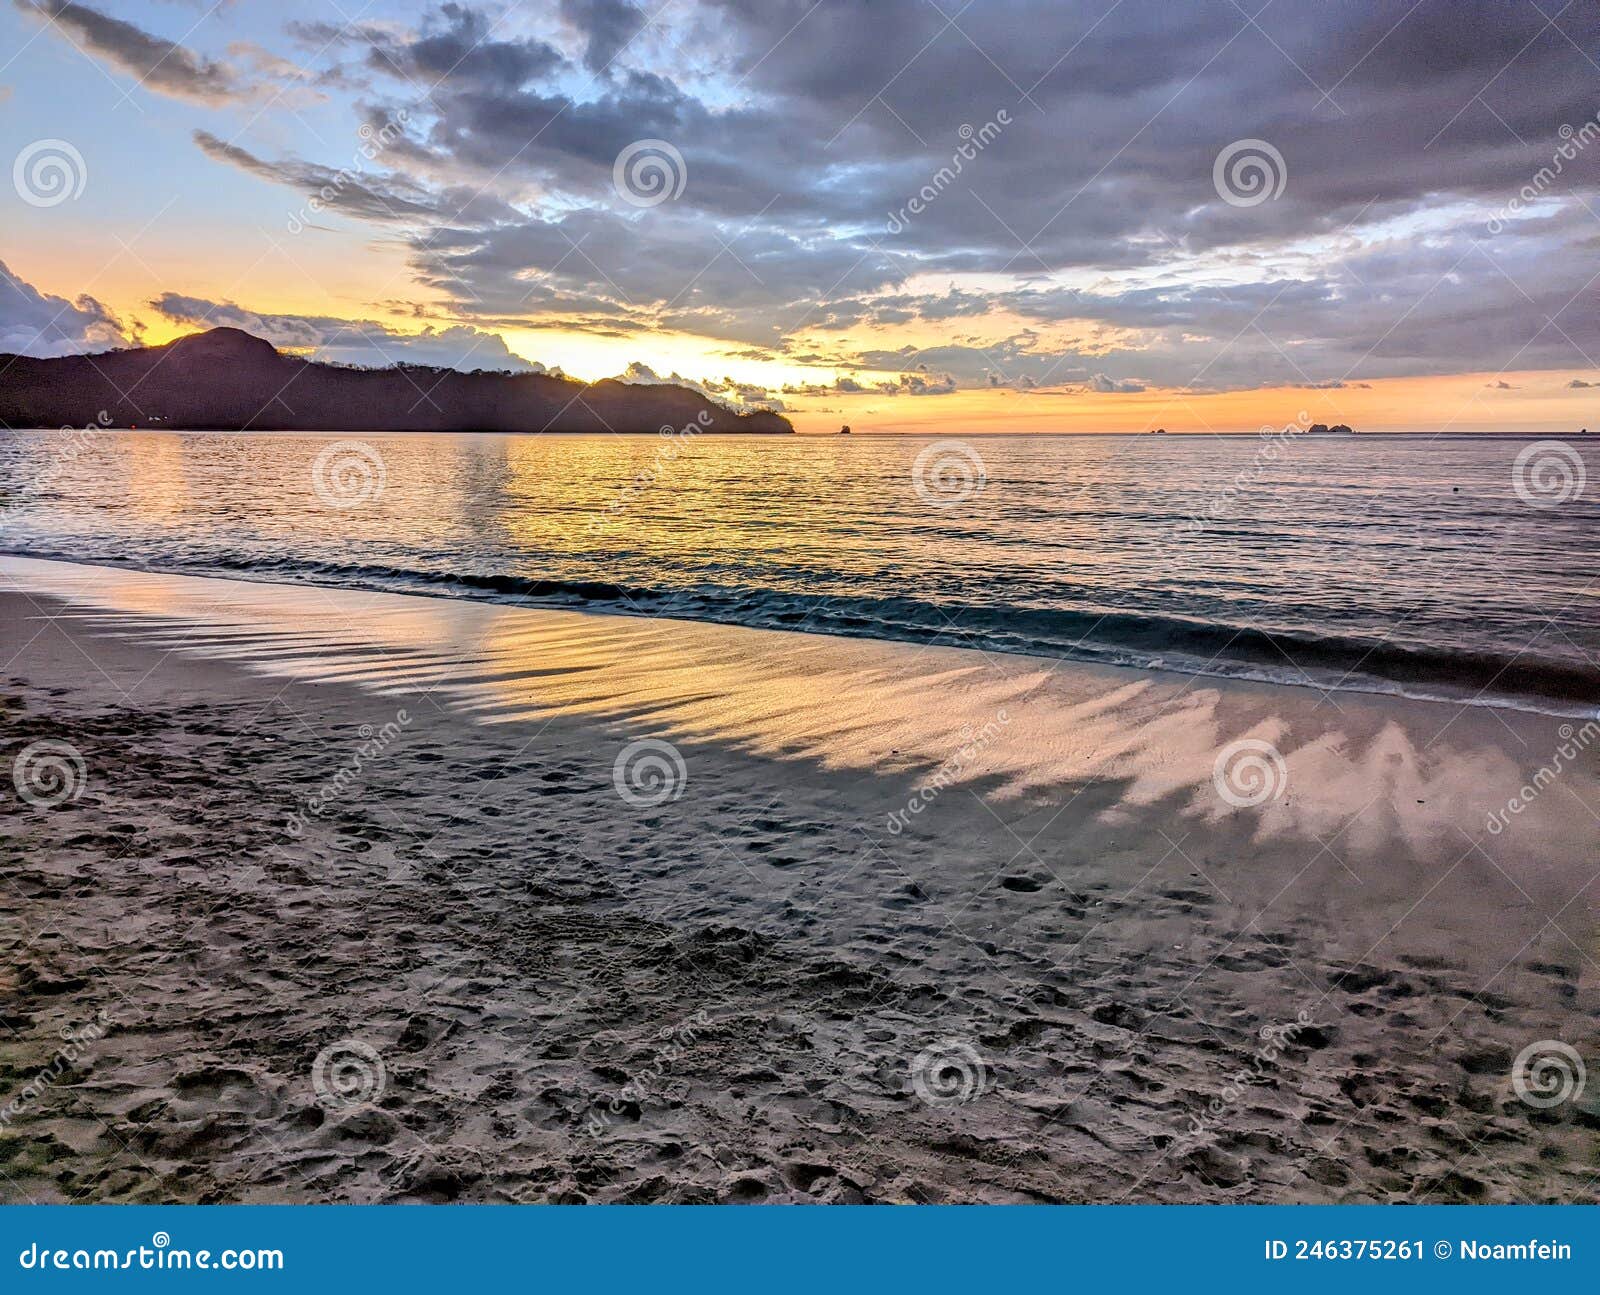 beautiful sunset at playa conchal beach in costa rica